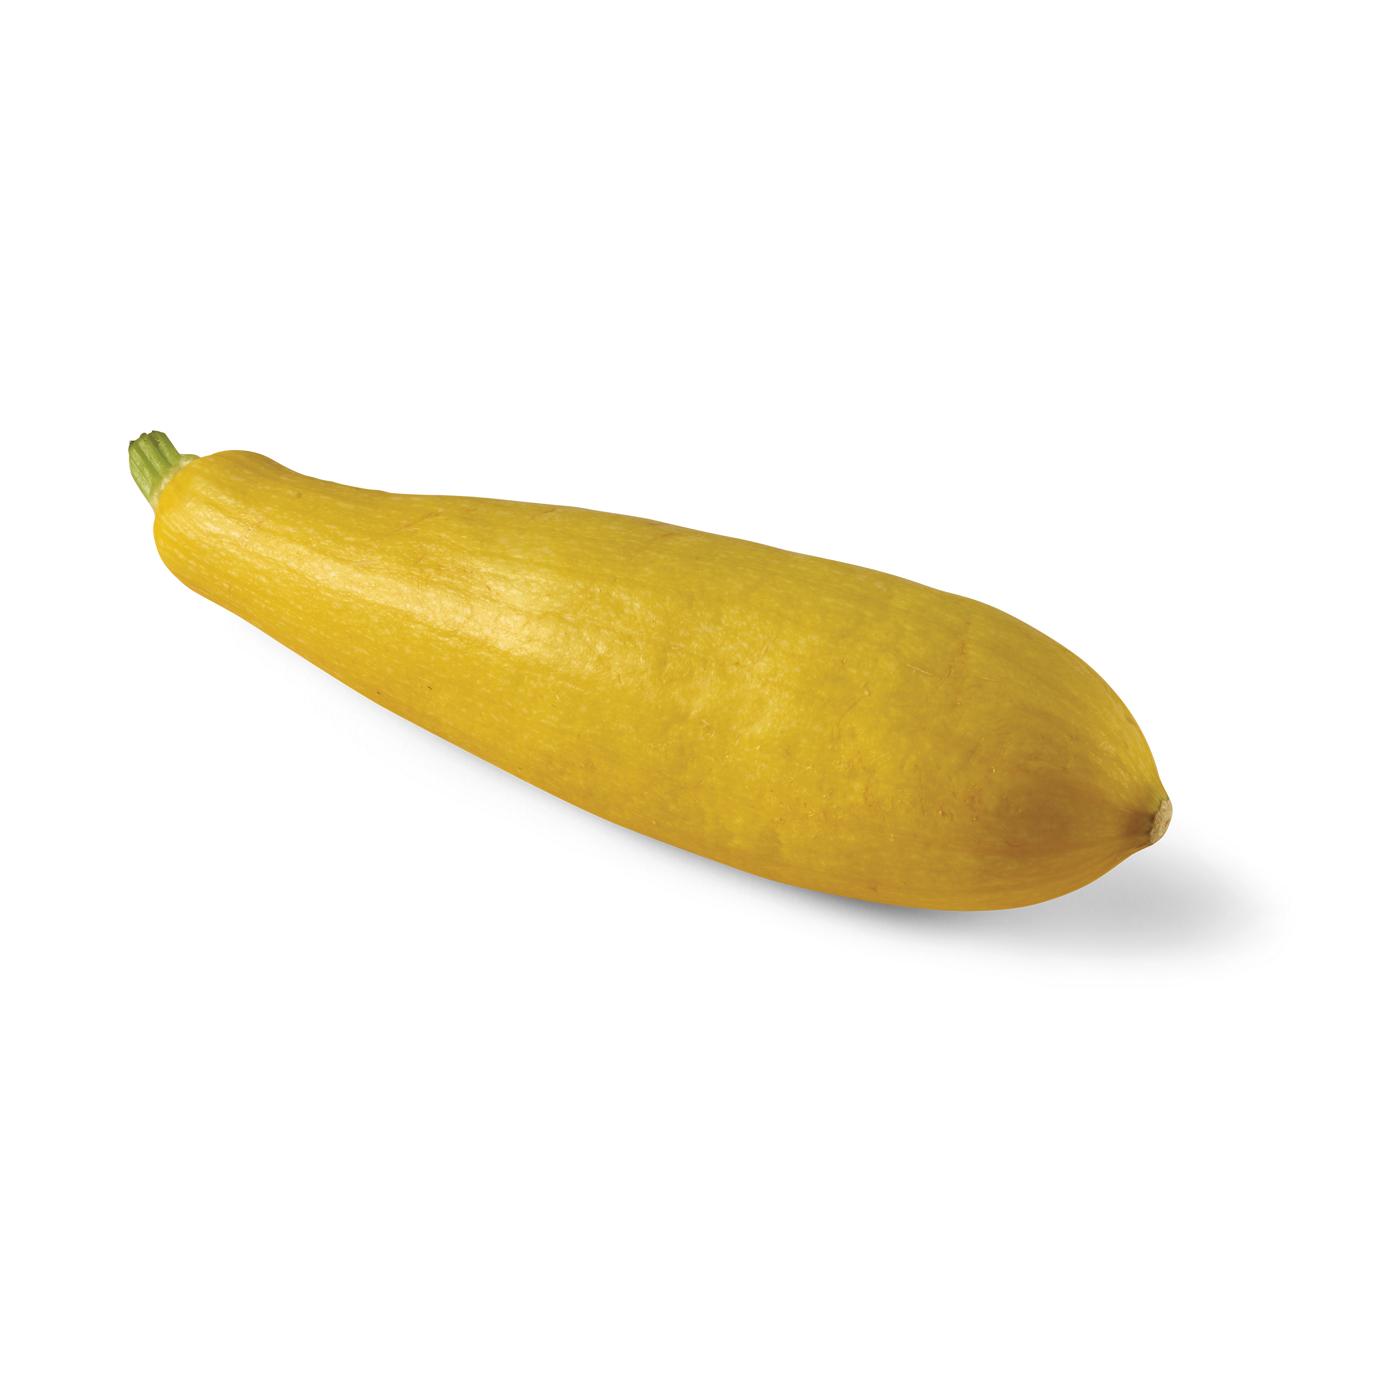 Fresh Organic Yellow Squash; image 1 of 2